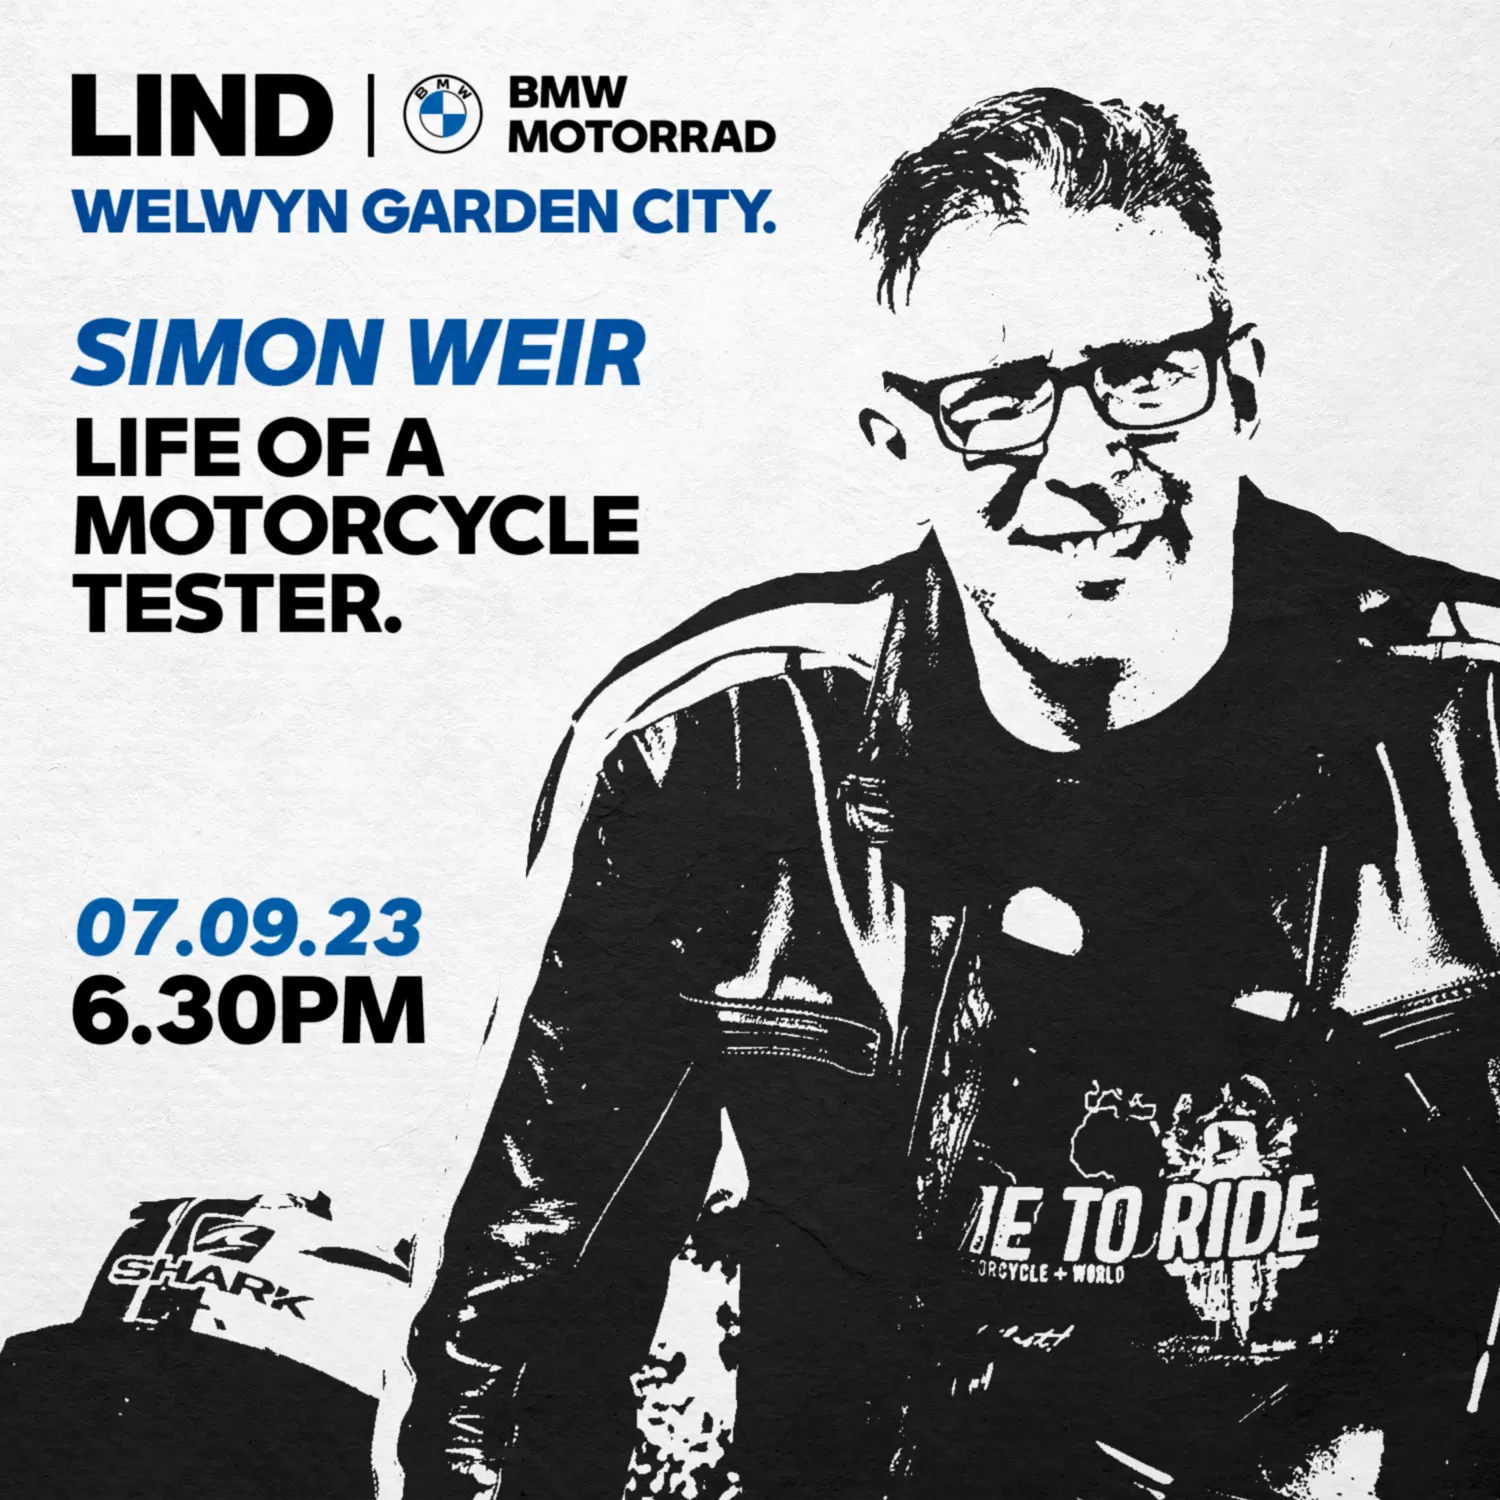 An Evening with Simon Wier at BMW Welwyn Garden City